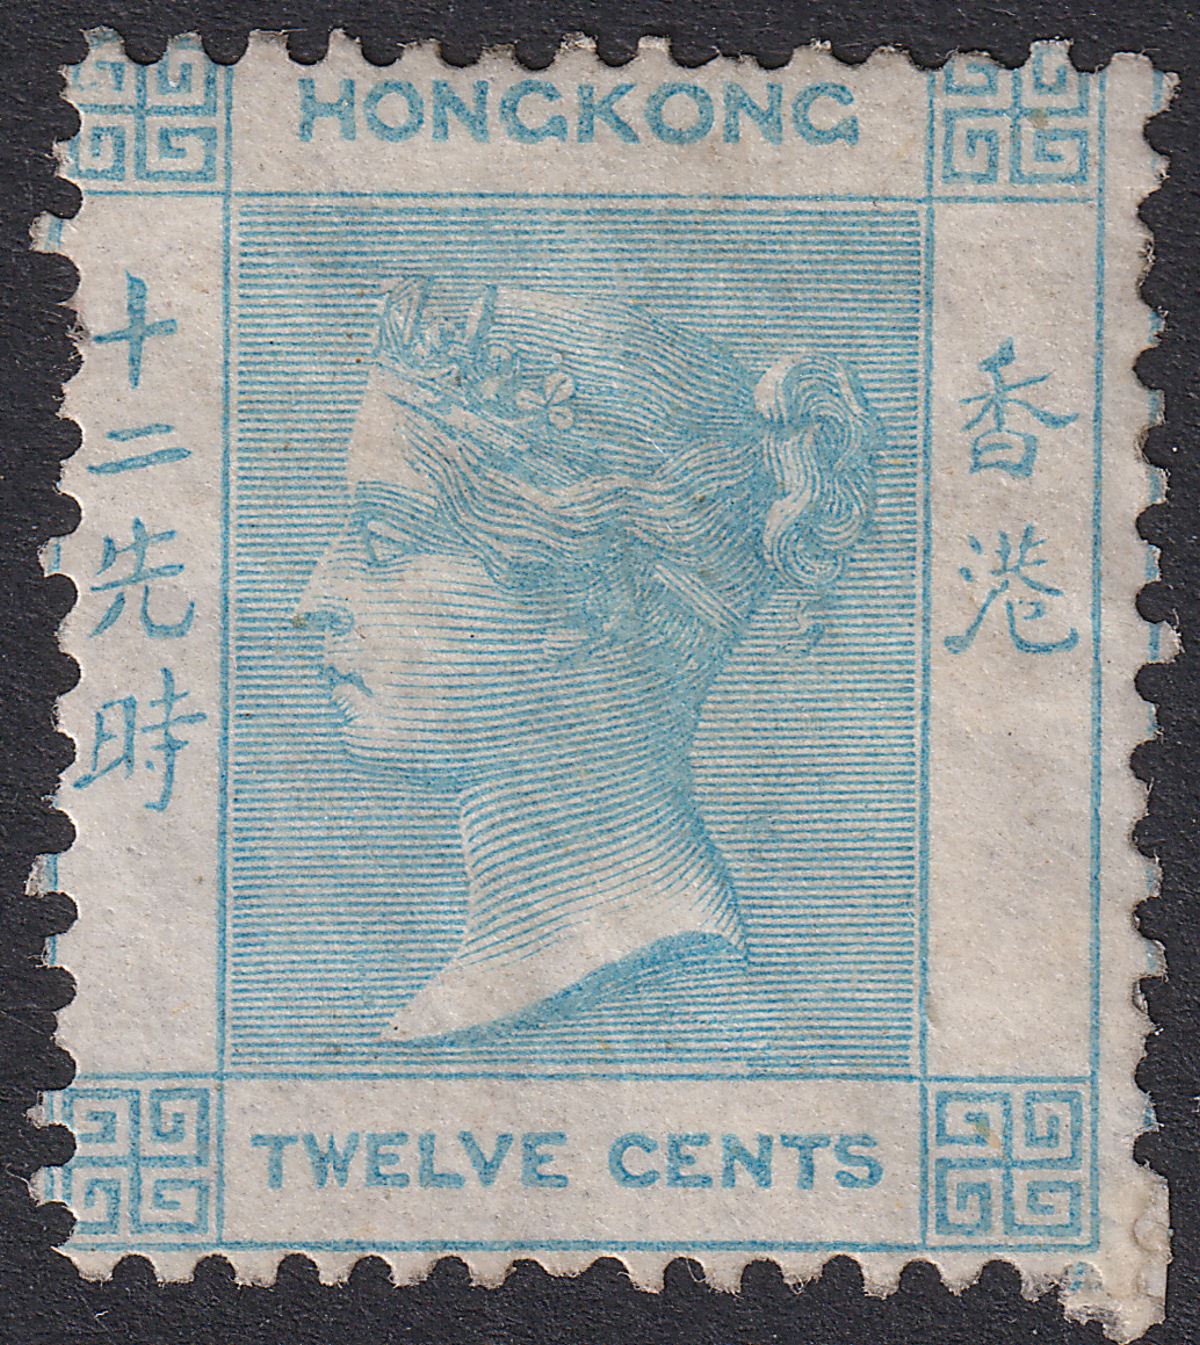 Hong Kong 1862 QV 12c Pale Greenish Blue Mint SG3 cat £650 with corner adhesion